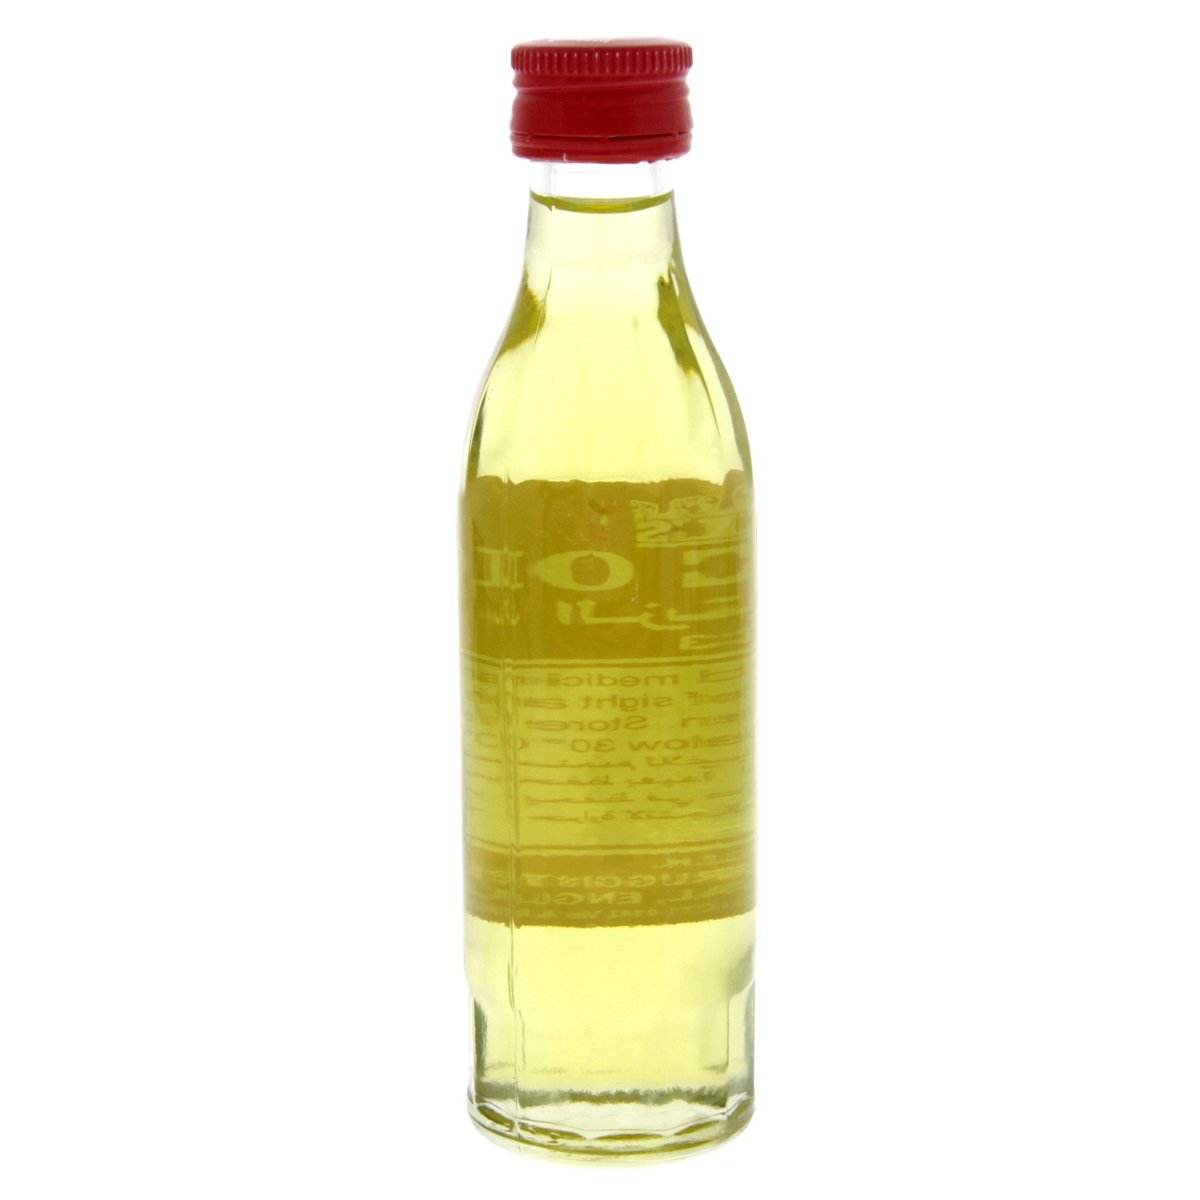 Bells Olive Oil 70 ml